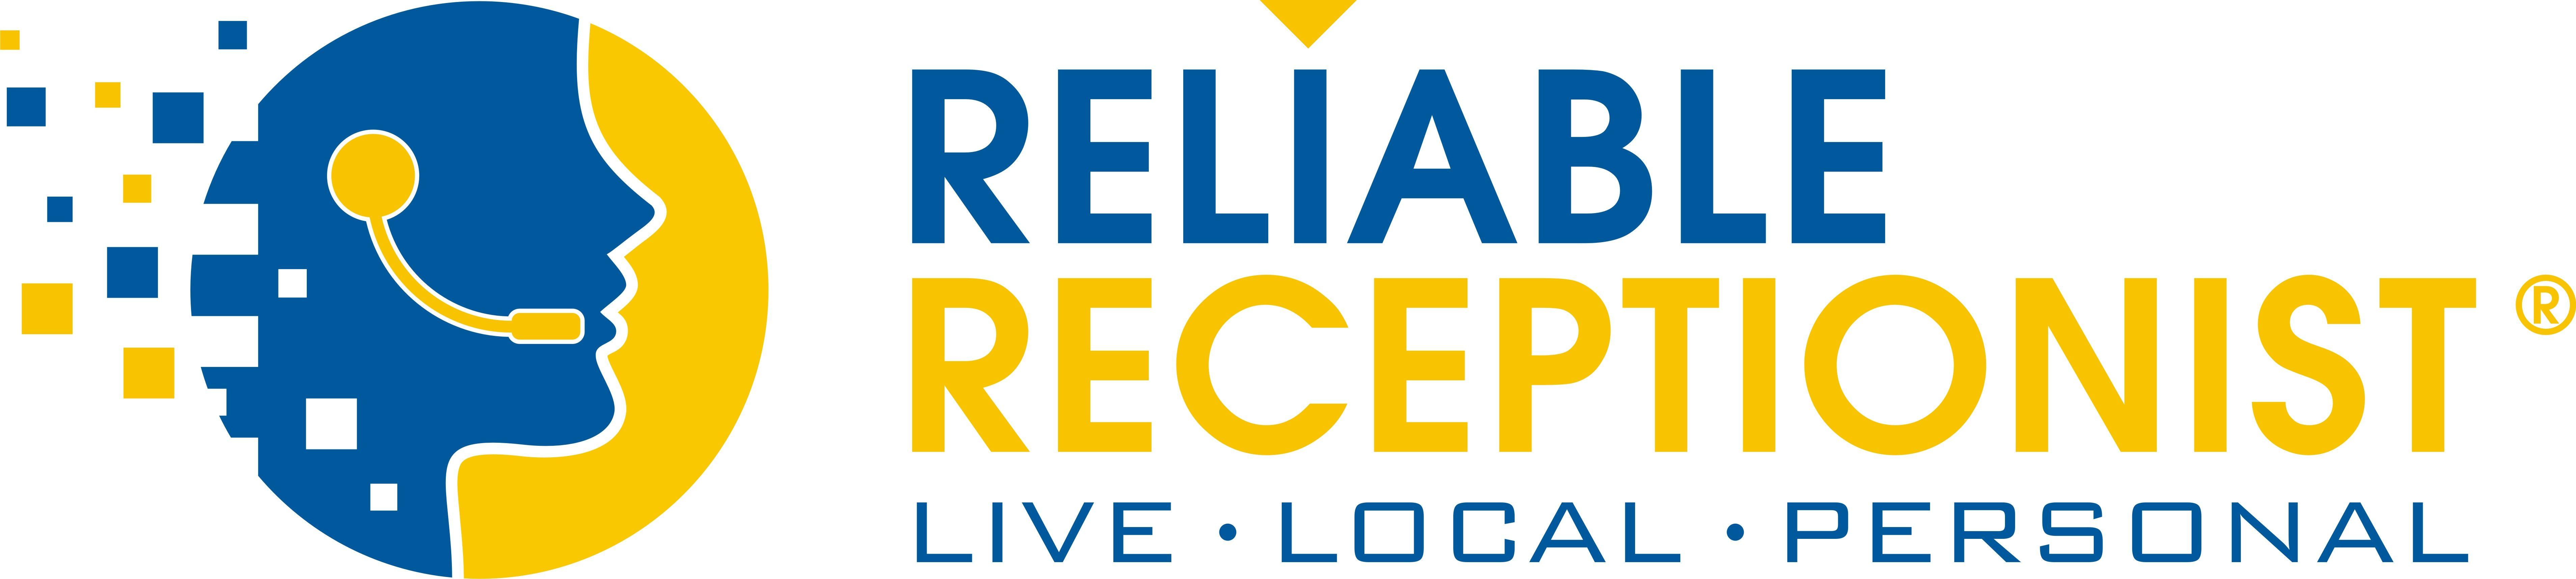 Receptionist Logo - File:Reliable Receptionist Logo.jpg - Wikimedia Commons